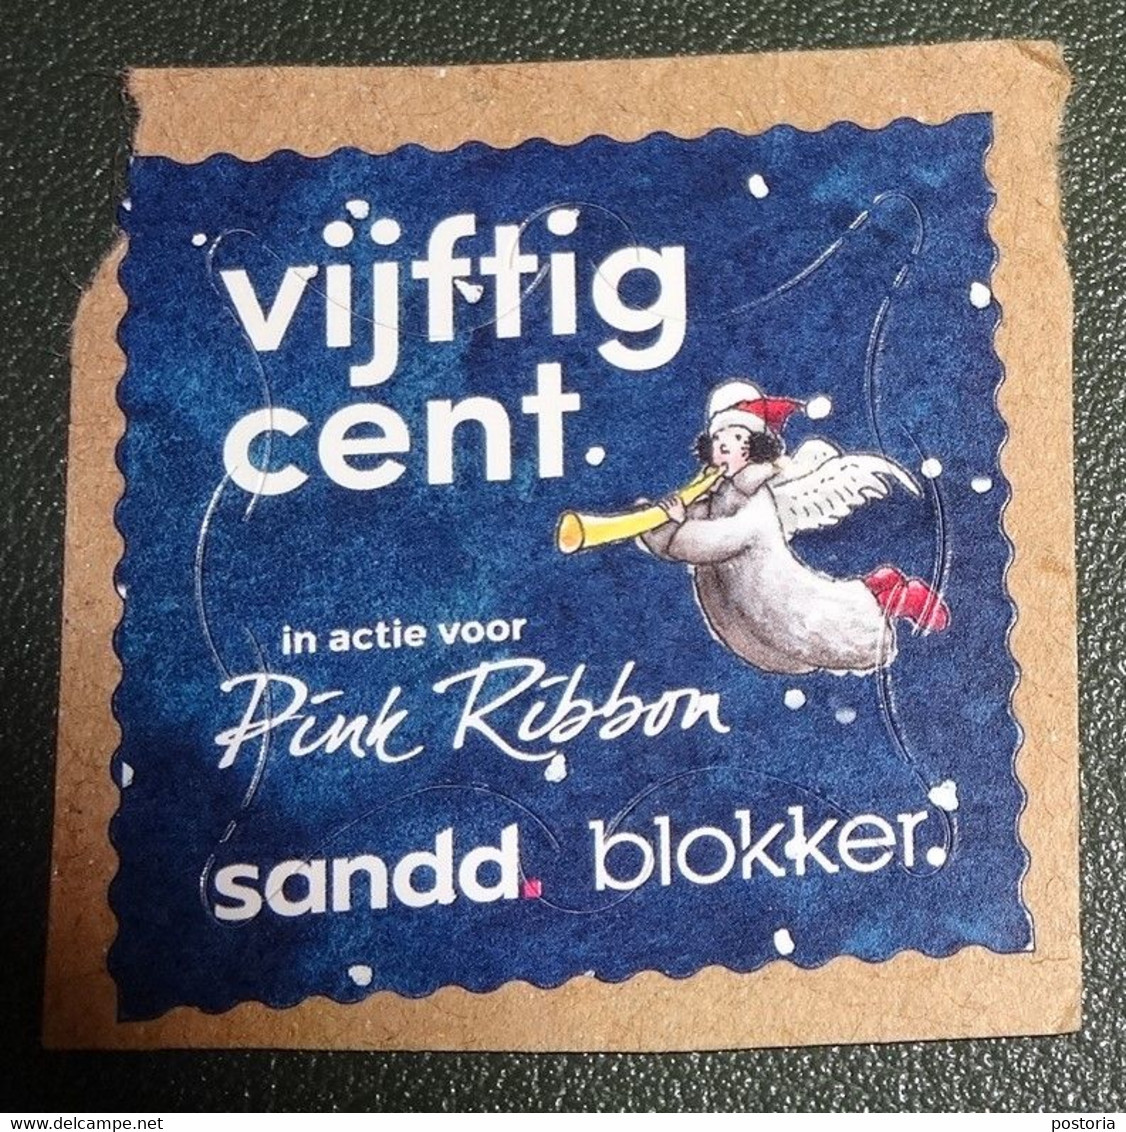 Nederland - Sandd - Gebruikt - Onafgeweekt - Cancelled On Paper - Vijftig Cent - Pink Ribbon - Blokker - Engel - Gebruikt